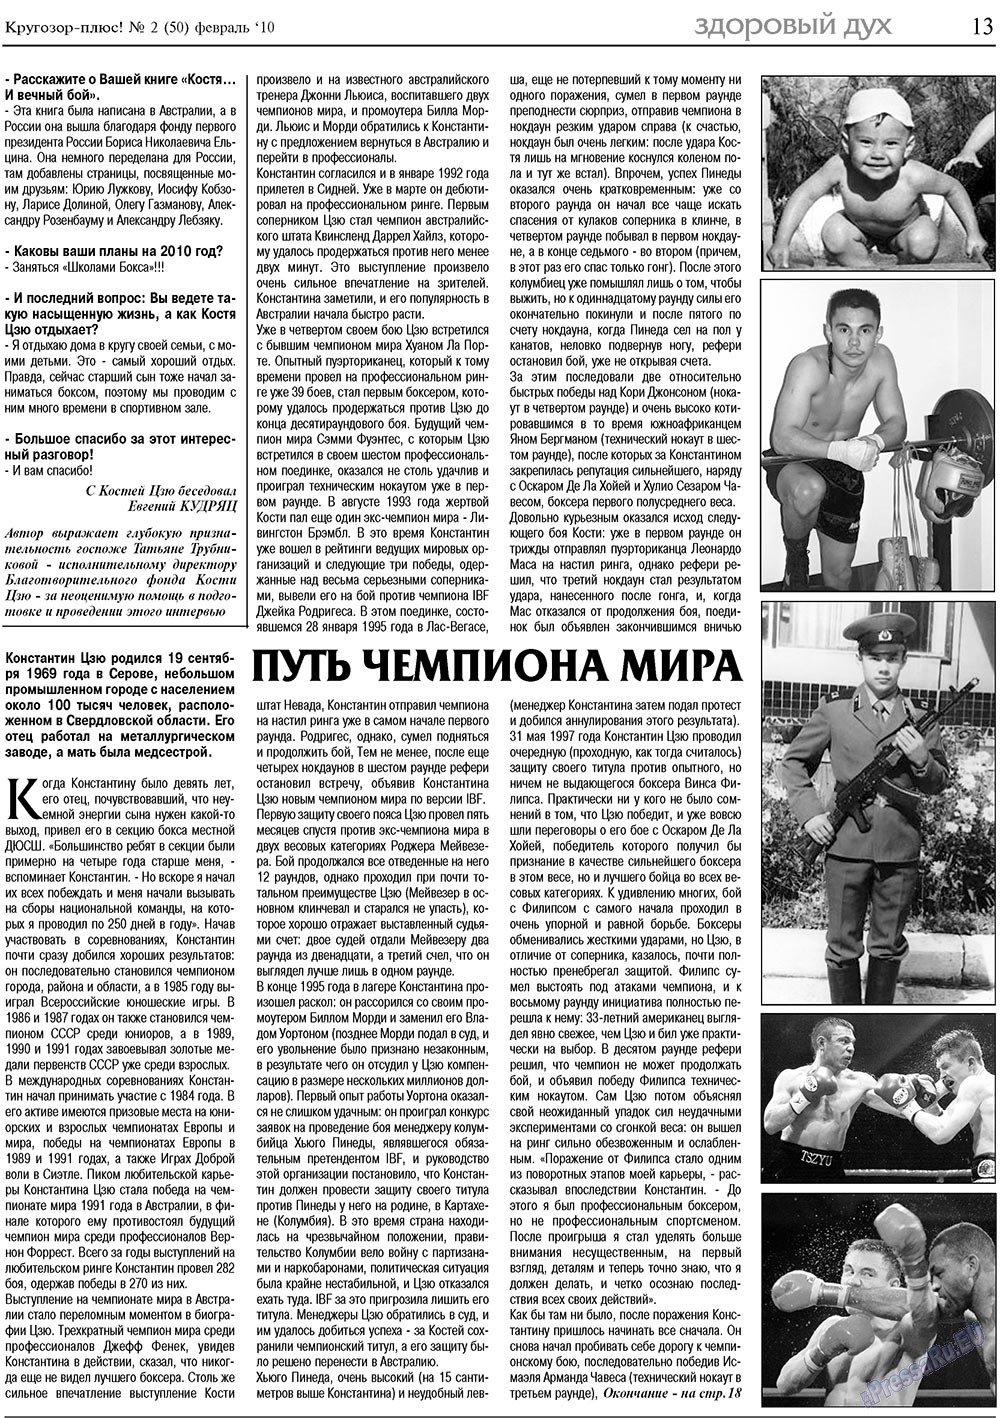 Кругозор плюс! (газета). 2010 год, номер 2, стр. 13